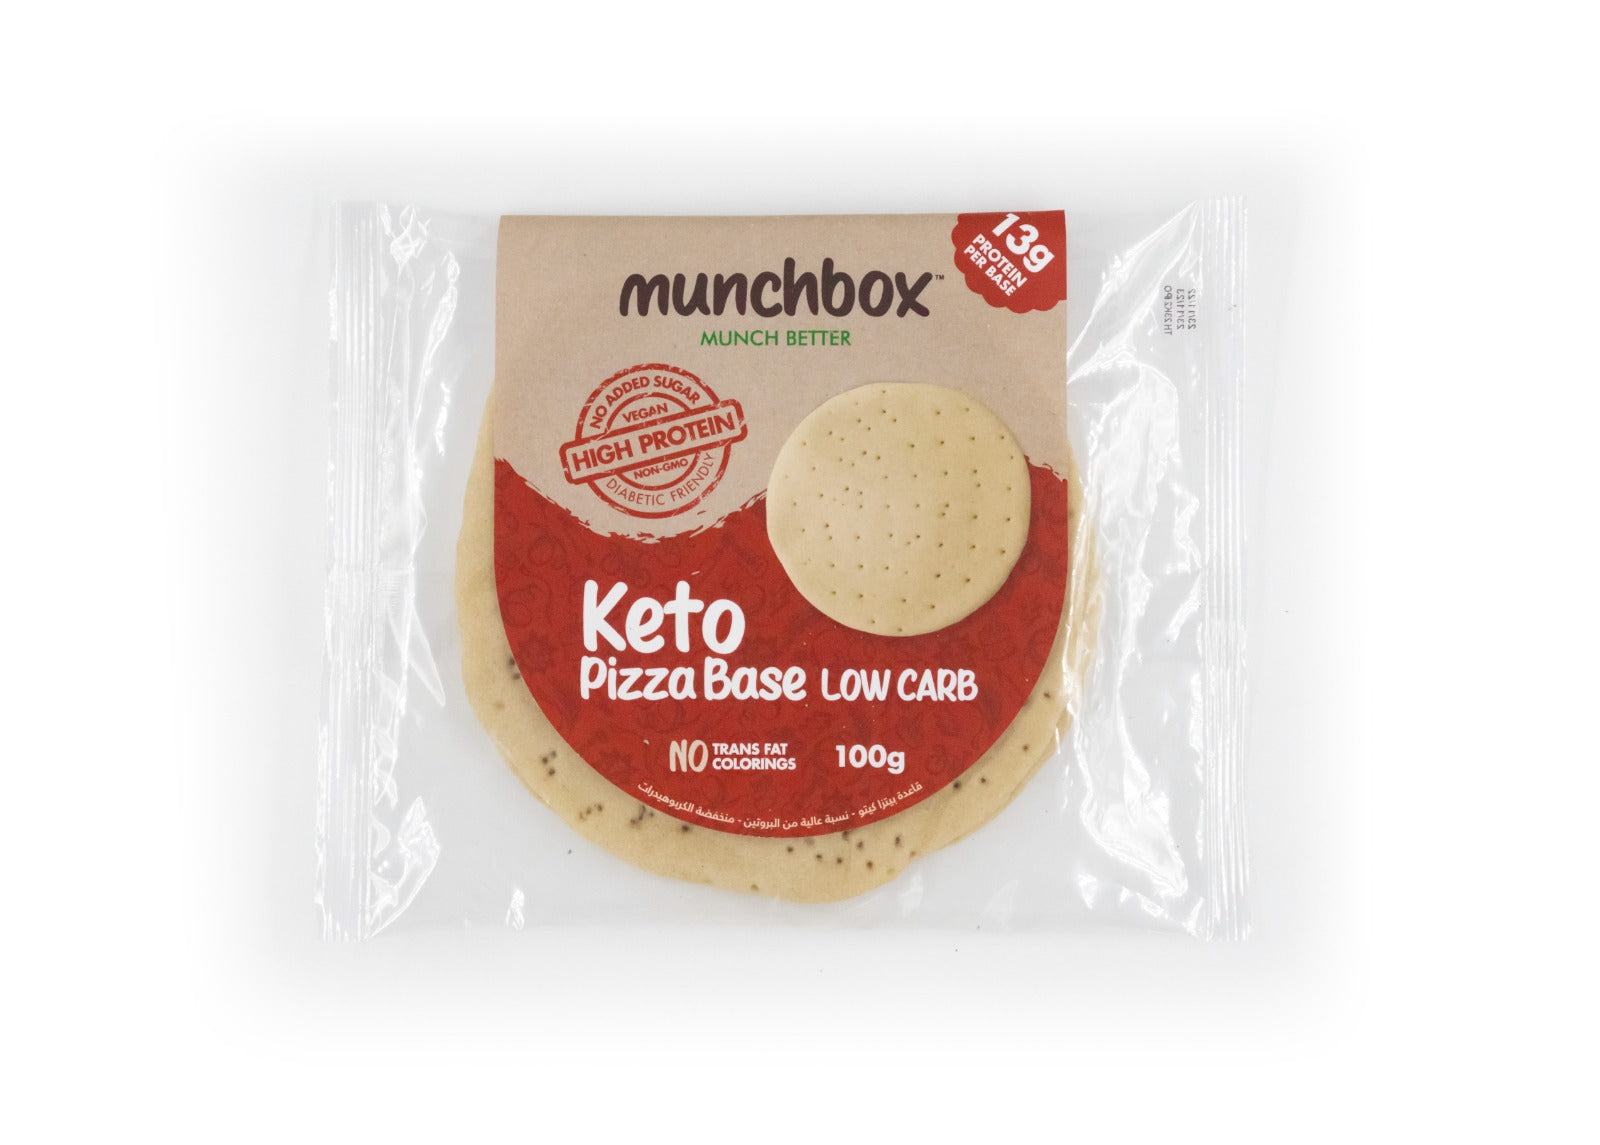 MUNCH BOX Keto Pizza Base Low Carb, 2 x 50g